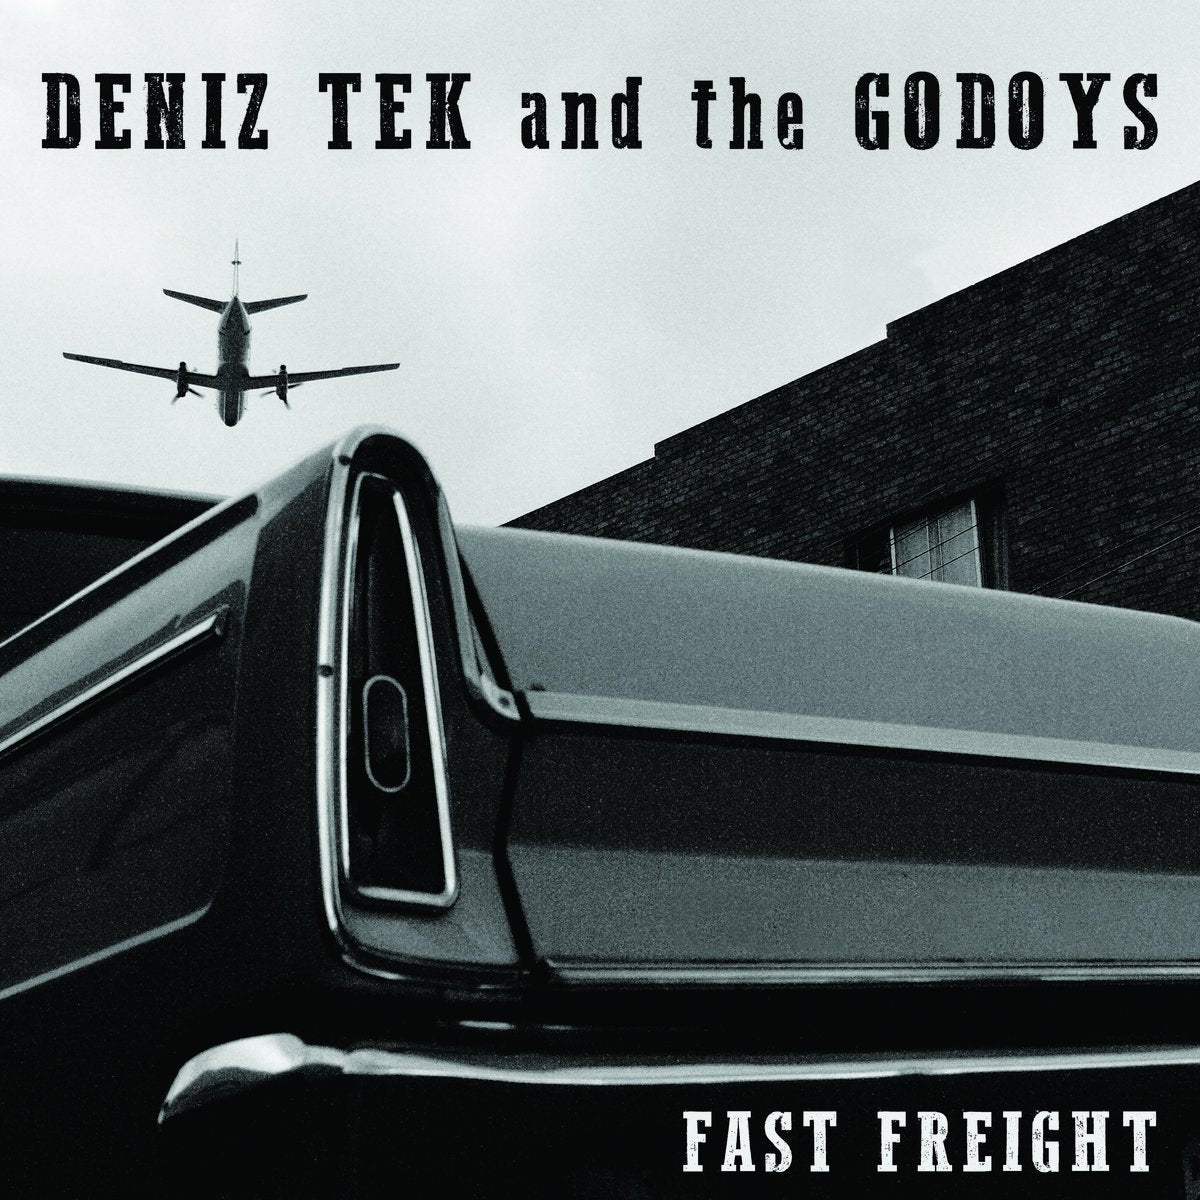 Deniz Tek And The Godoys "Fast Freight" LP